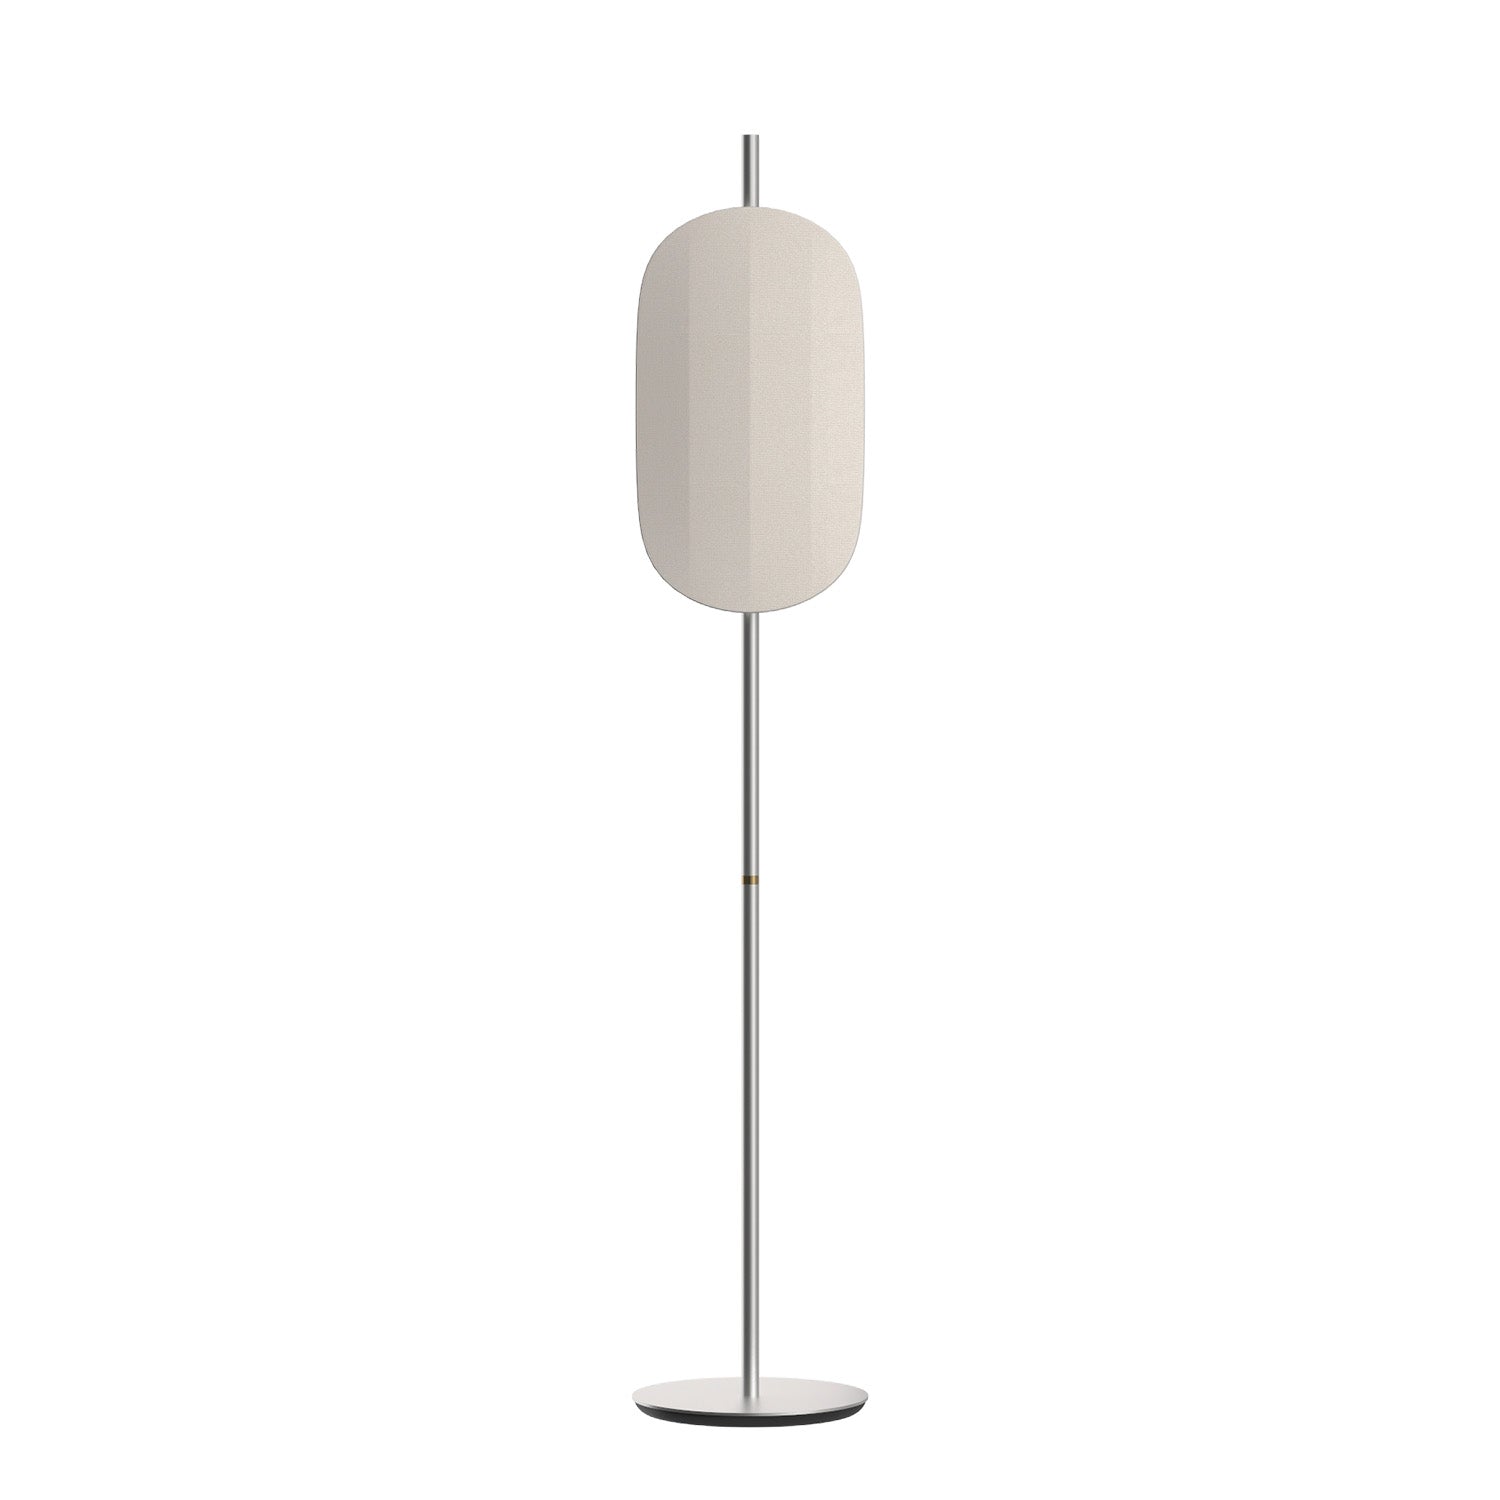 VOYAGE - Floor lamp in fabric and sleek aluminum design